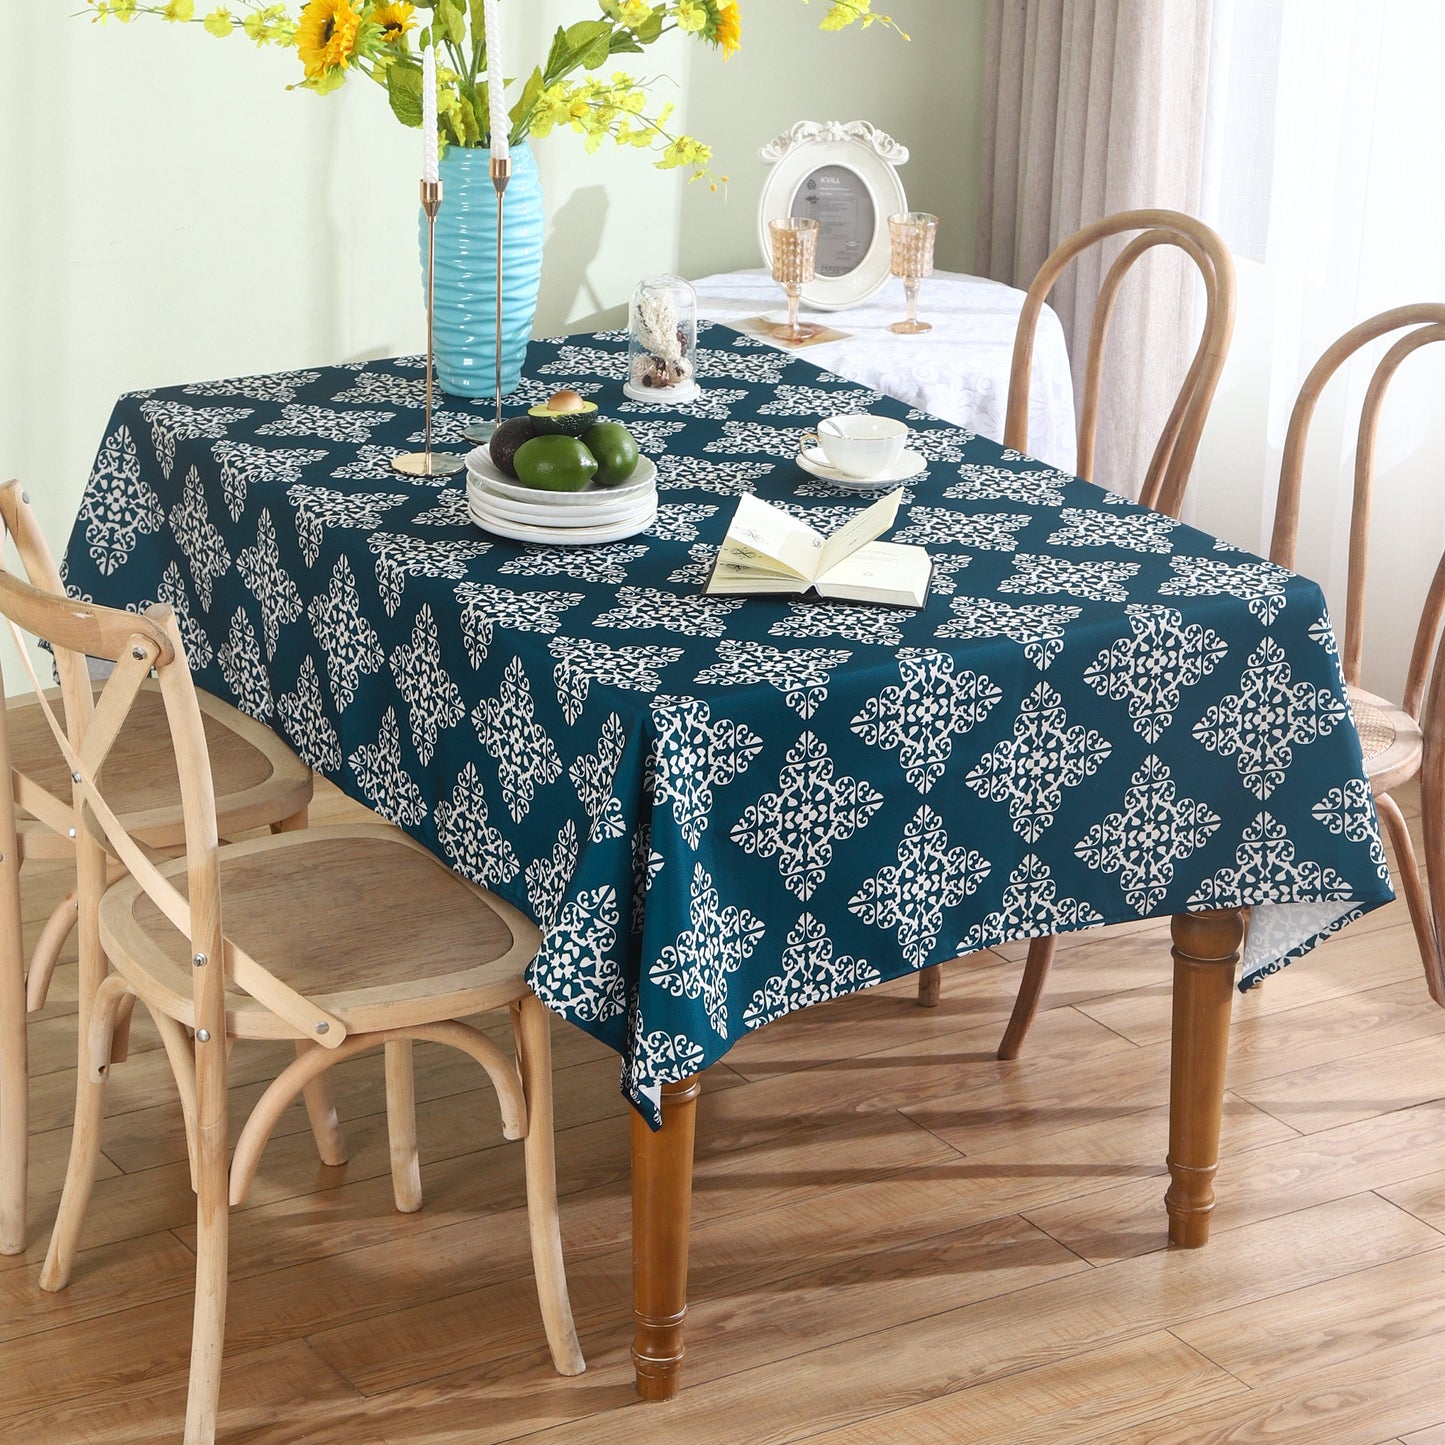 Water Resistant Indoor Outdoor Table Cloth 137x185 CM (Blue) - Design TC4-1